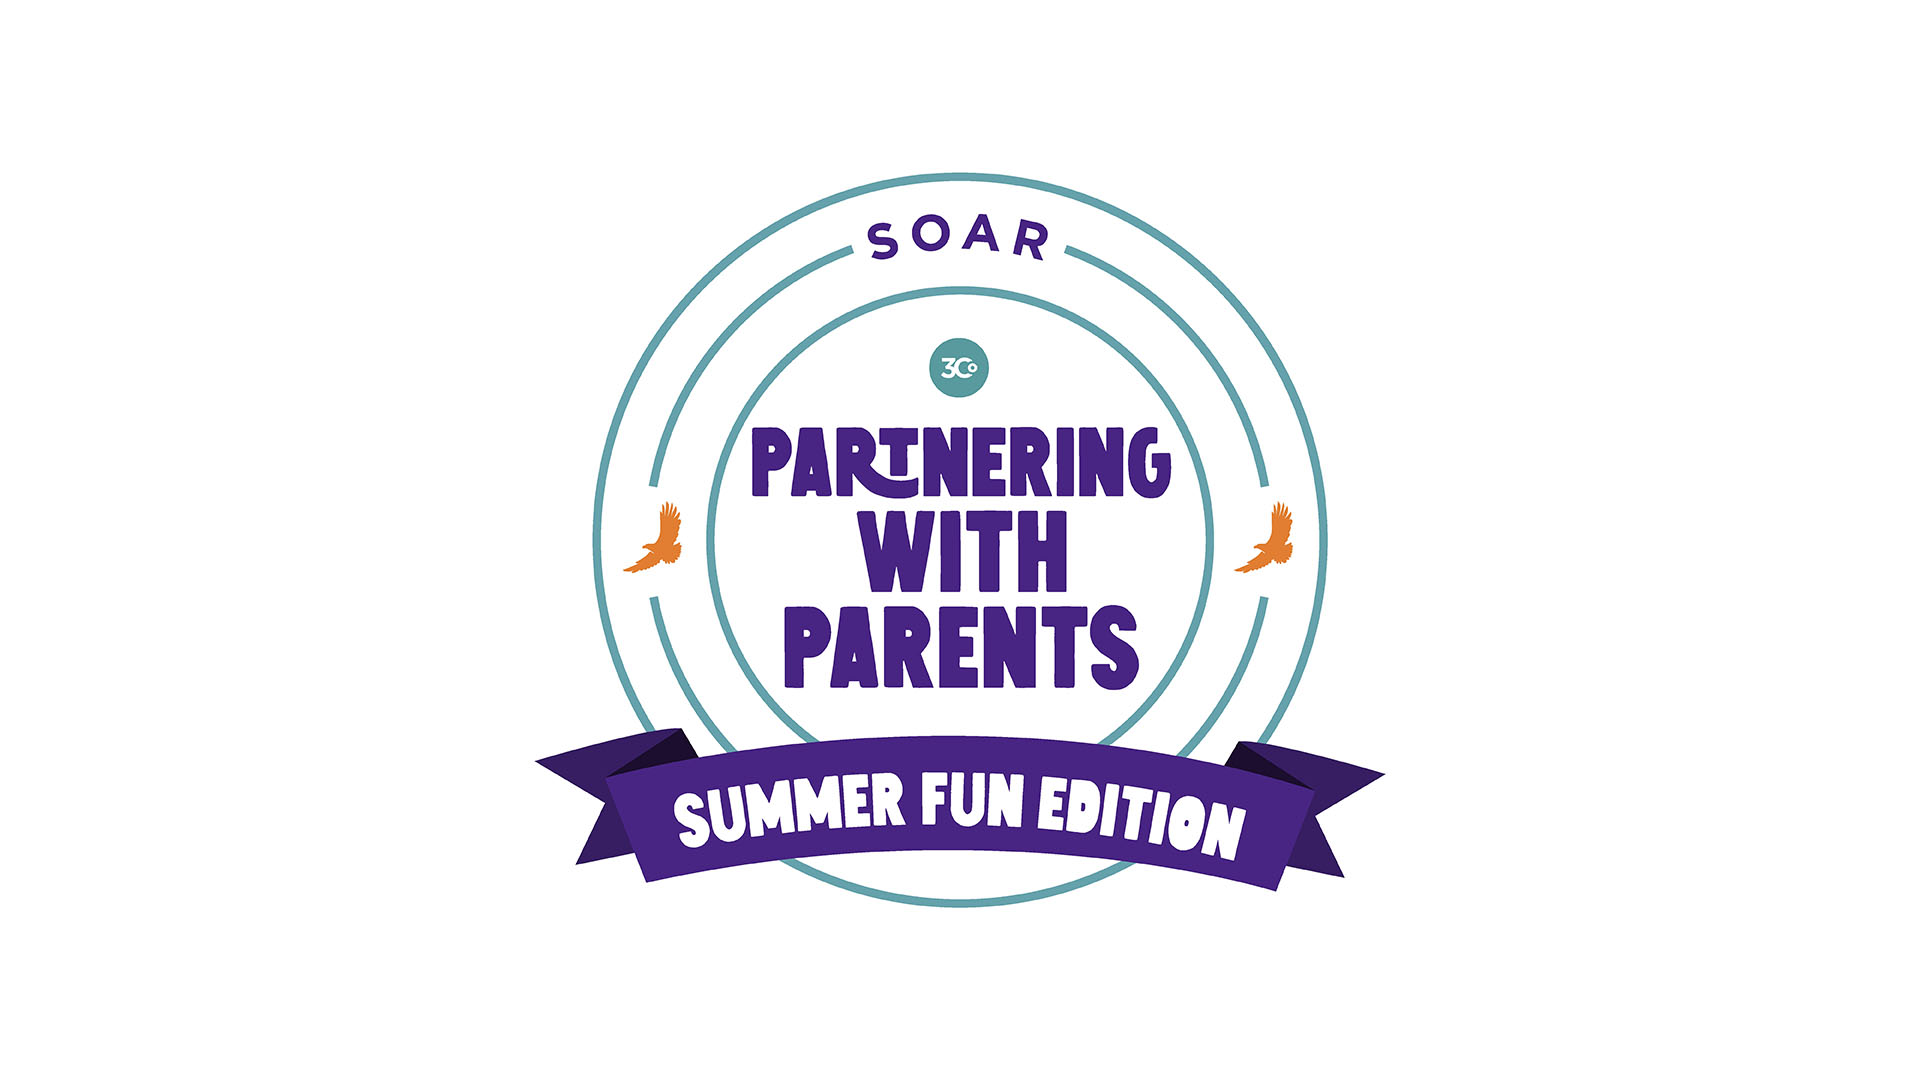 SOAR Partnering with Parents 